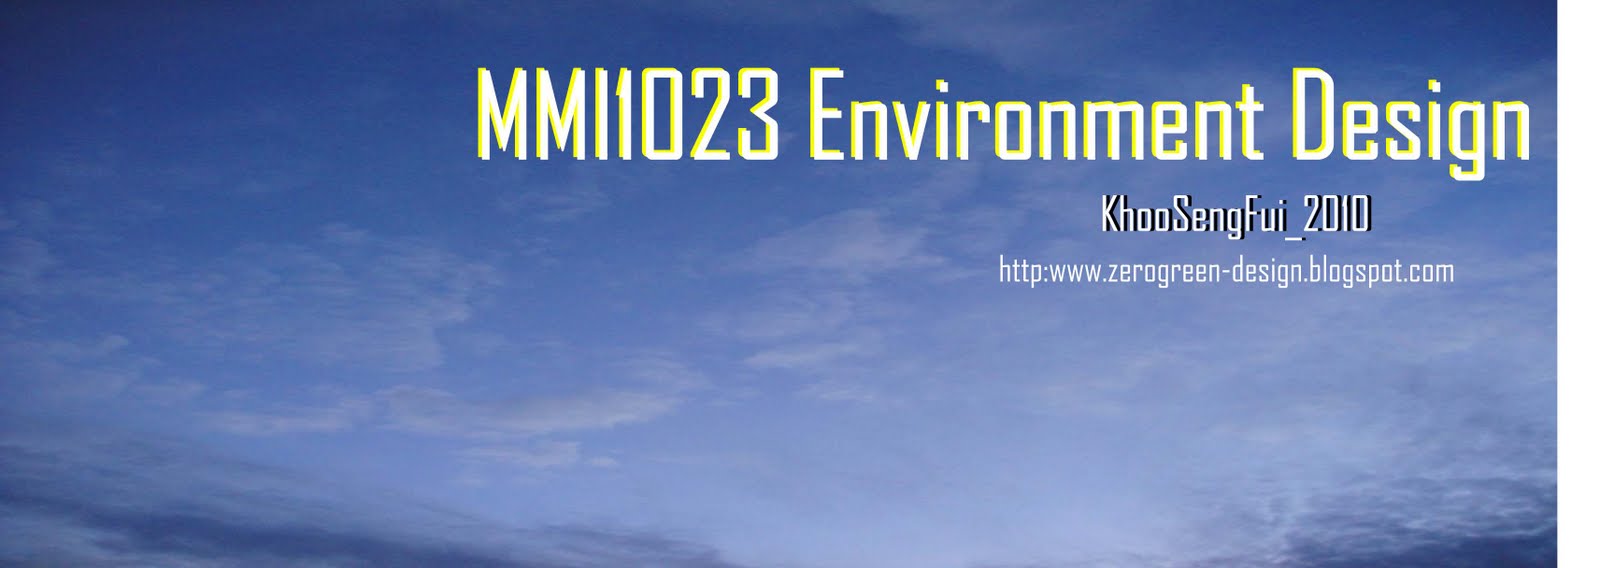 MMI1023 Environment Design